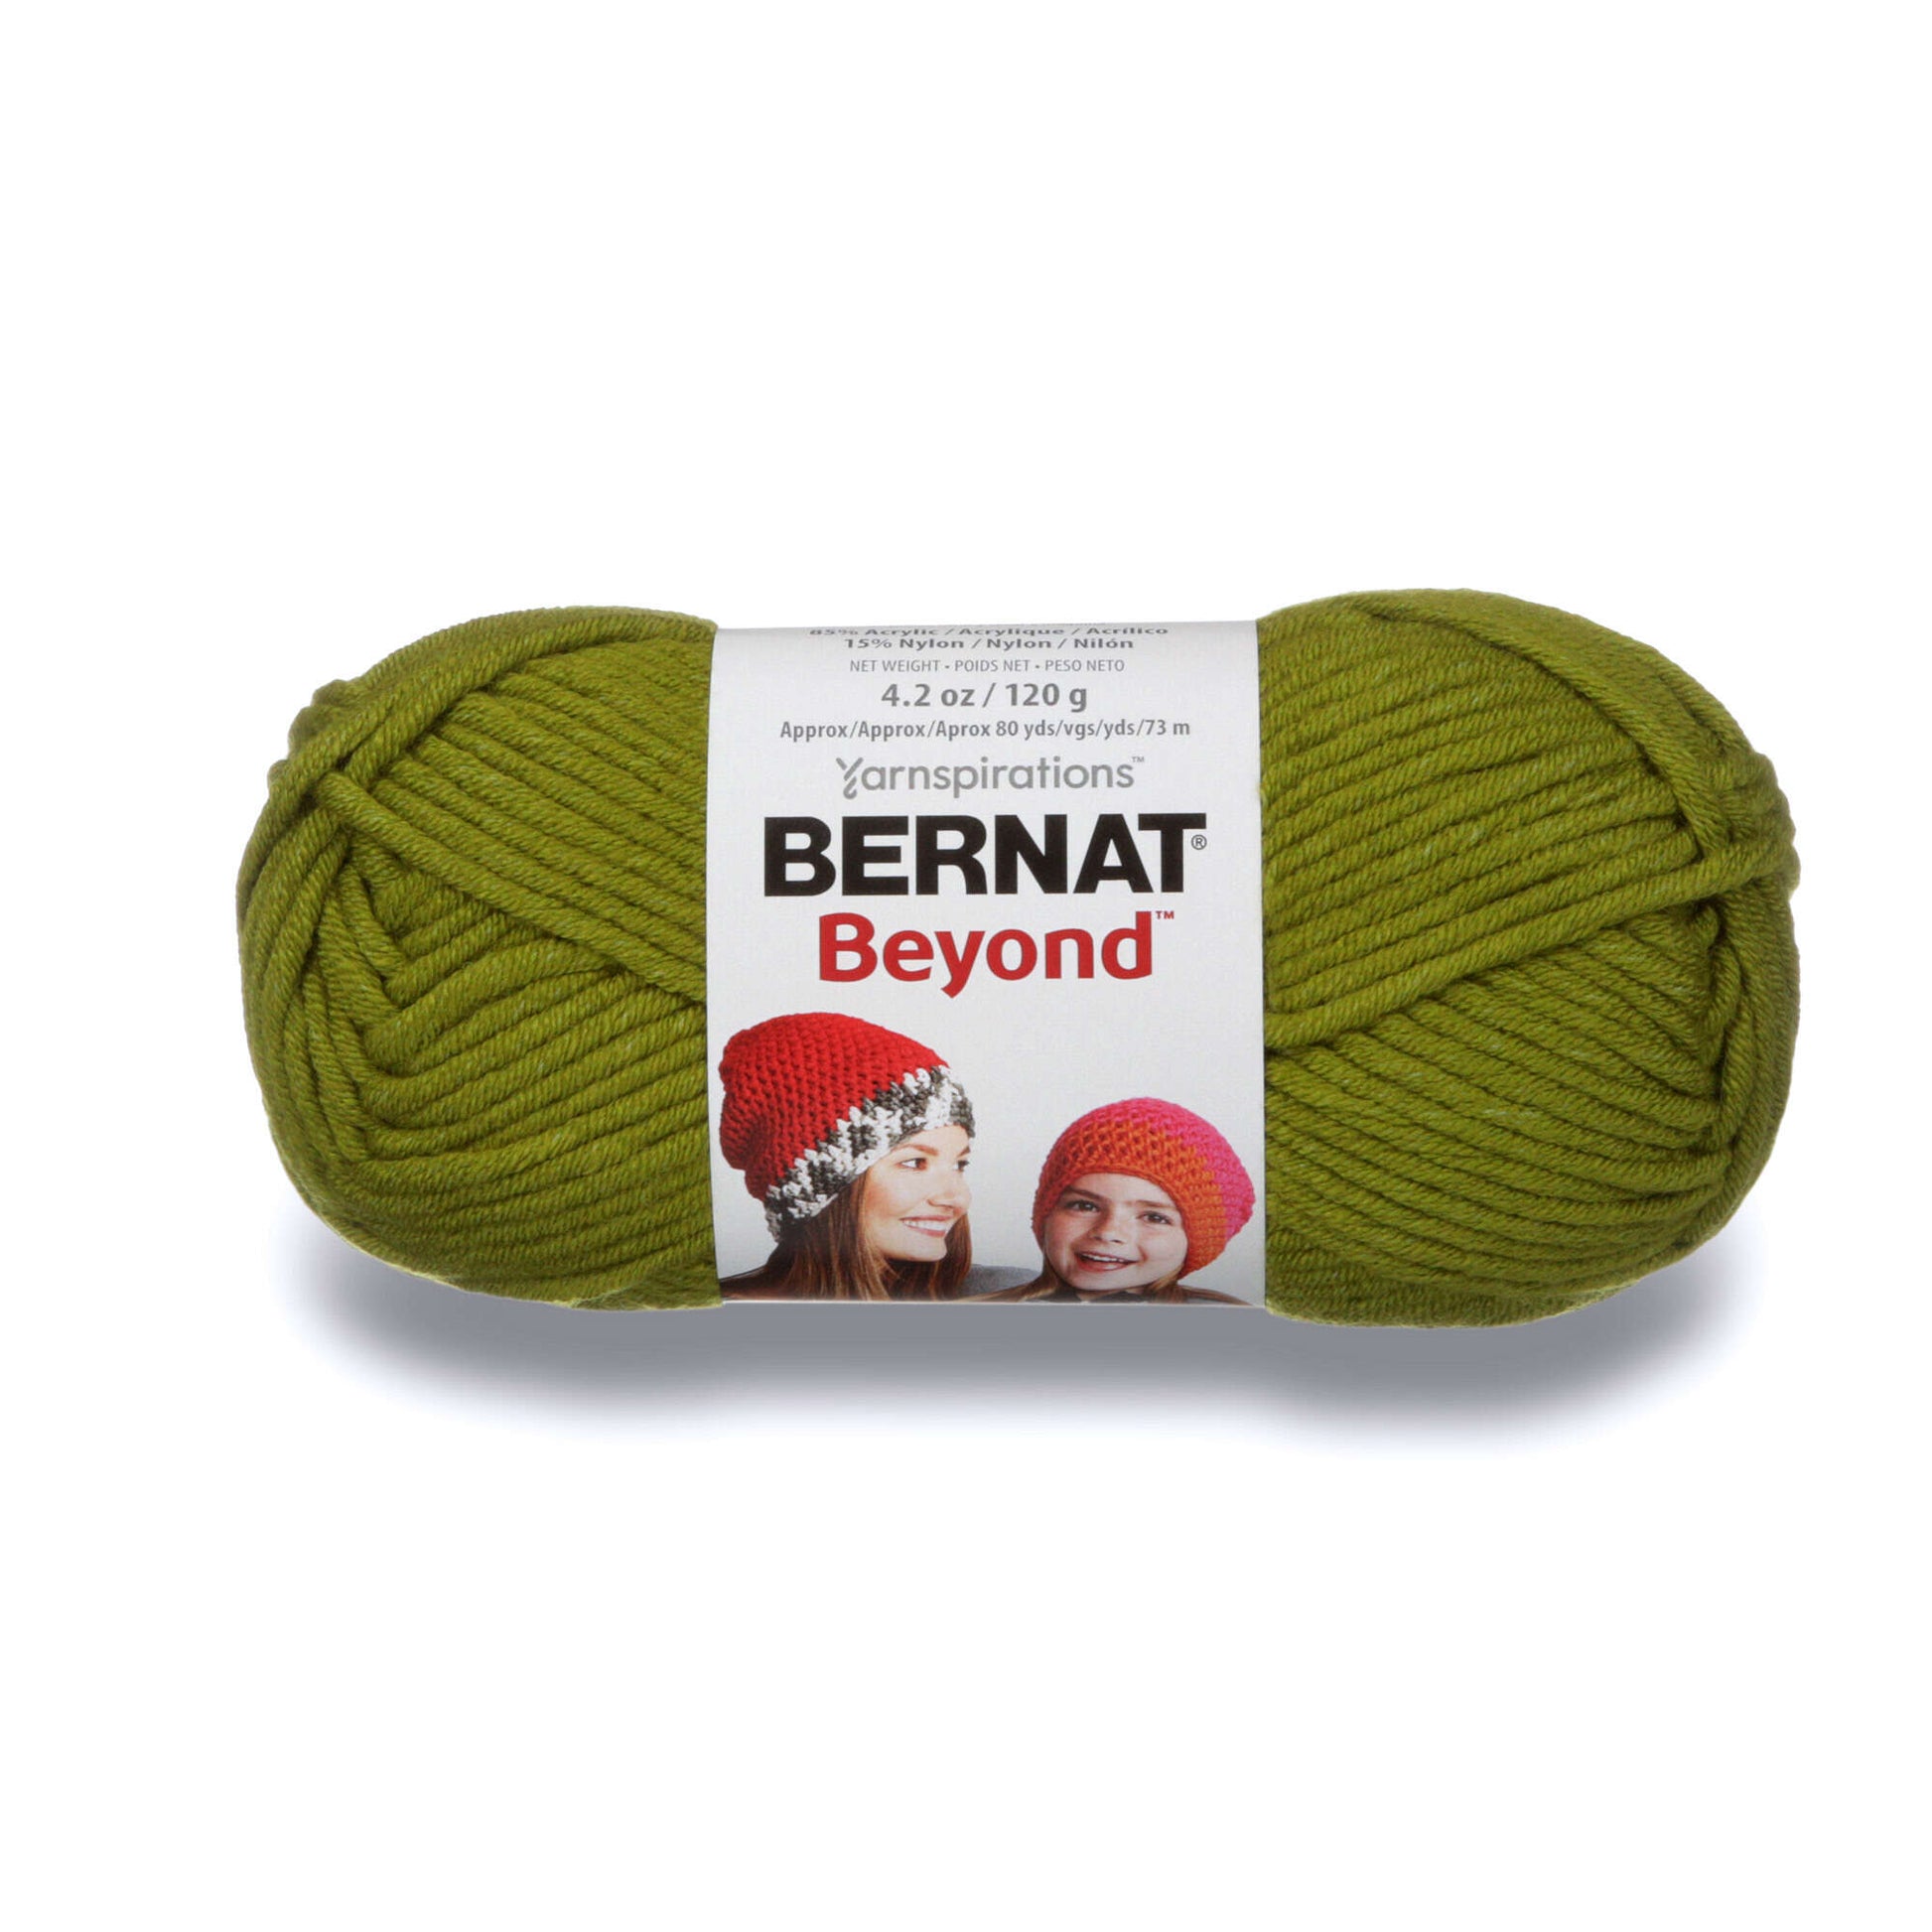 Bernat Beyond Yarn - Discontinued Shades